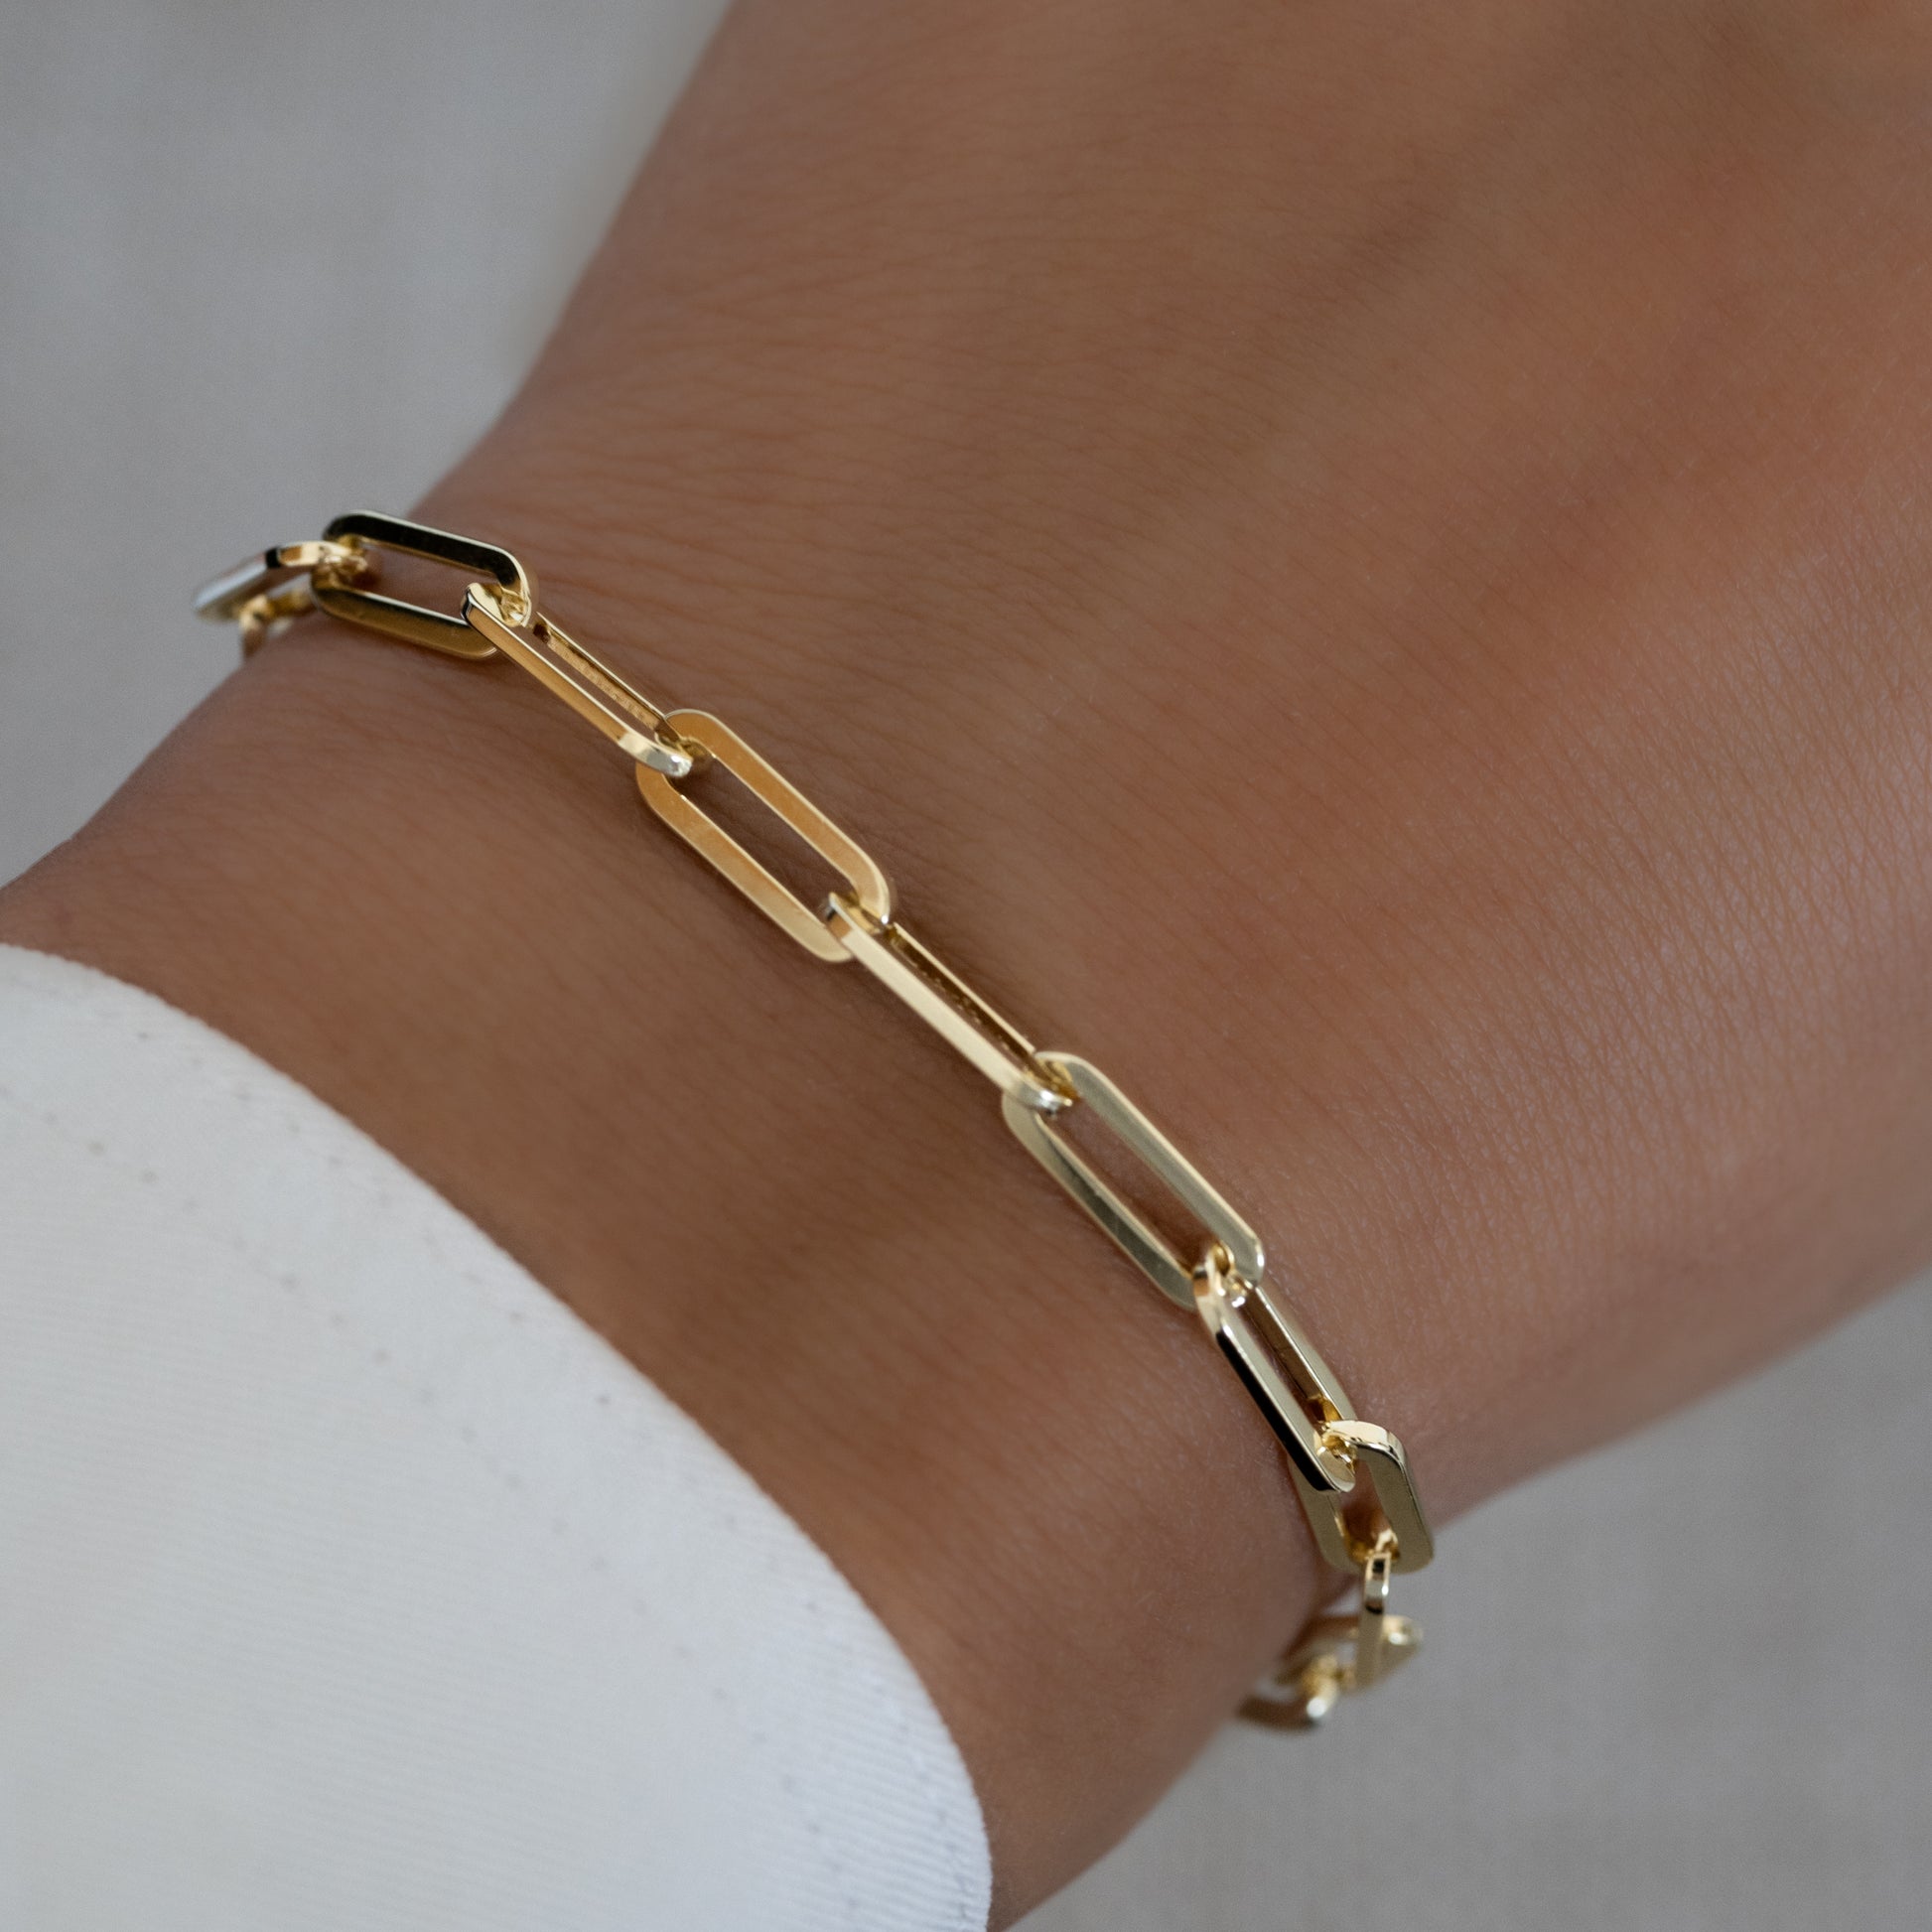 paperclip chain bracelet on a model